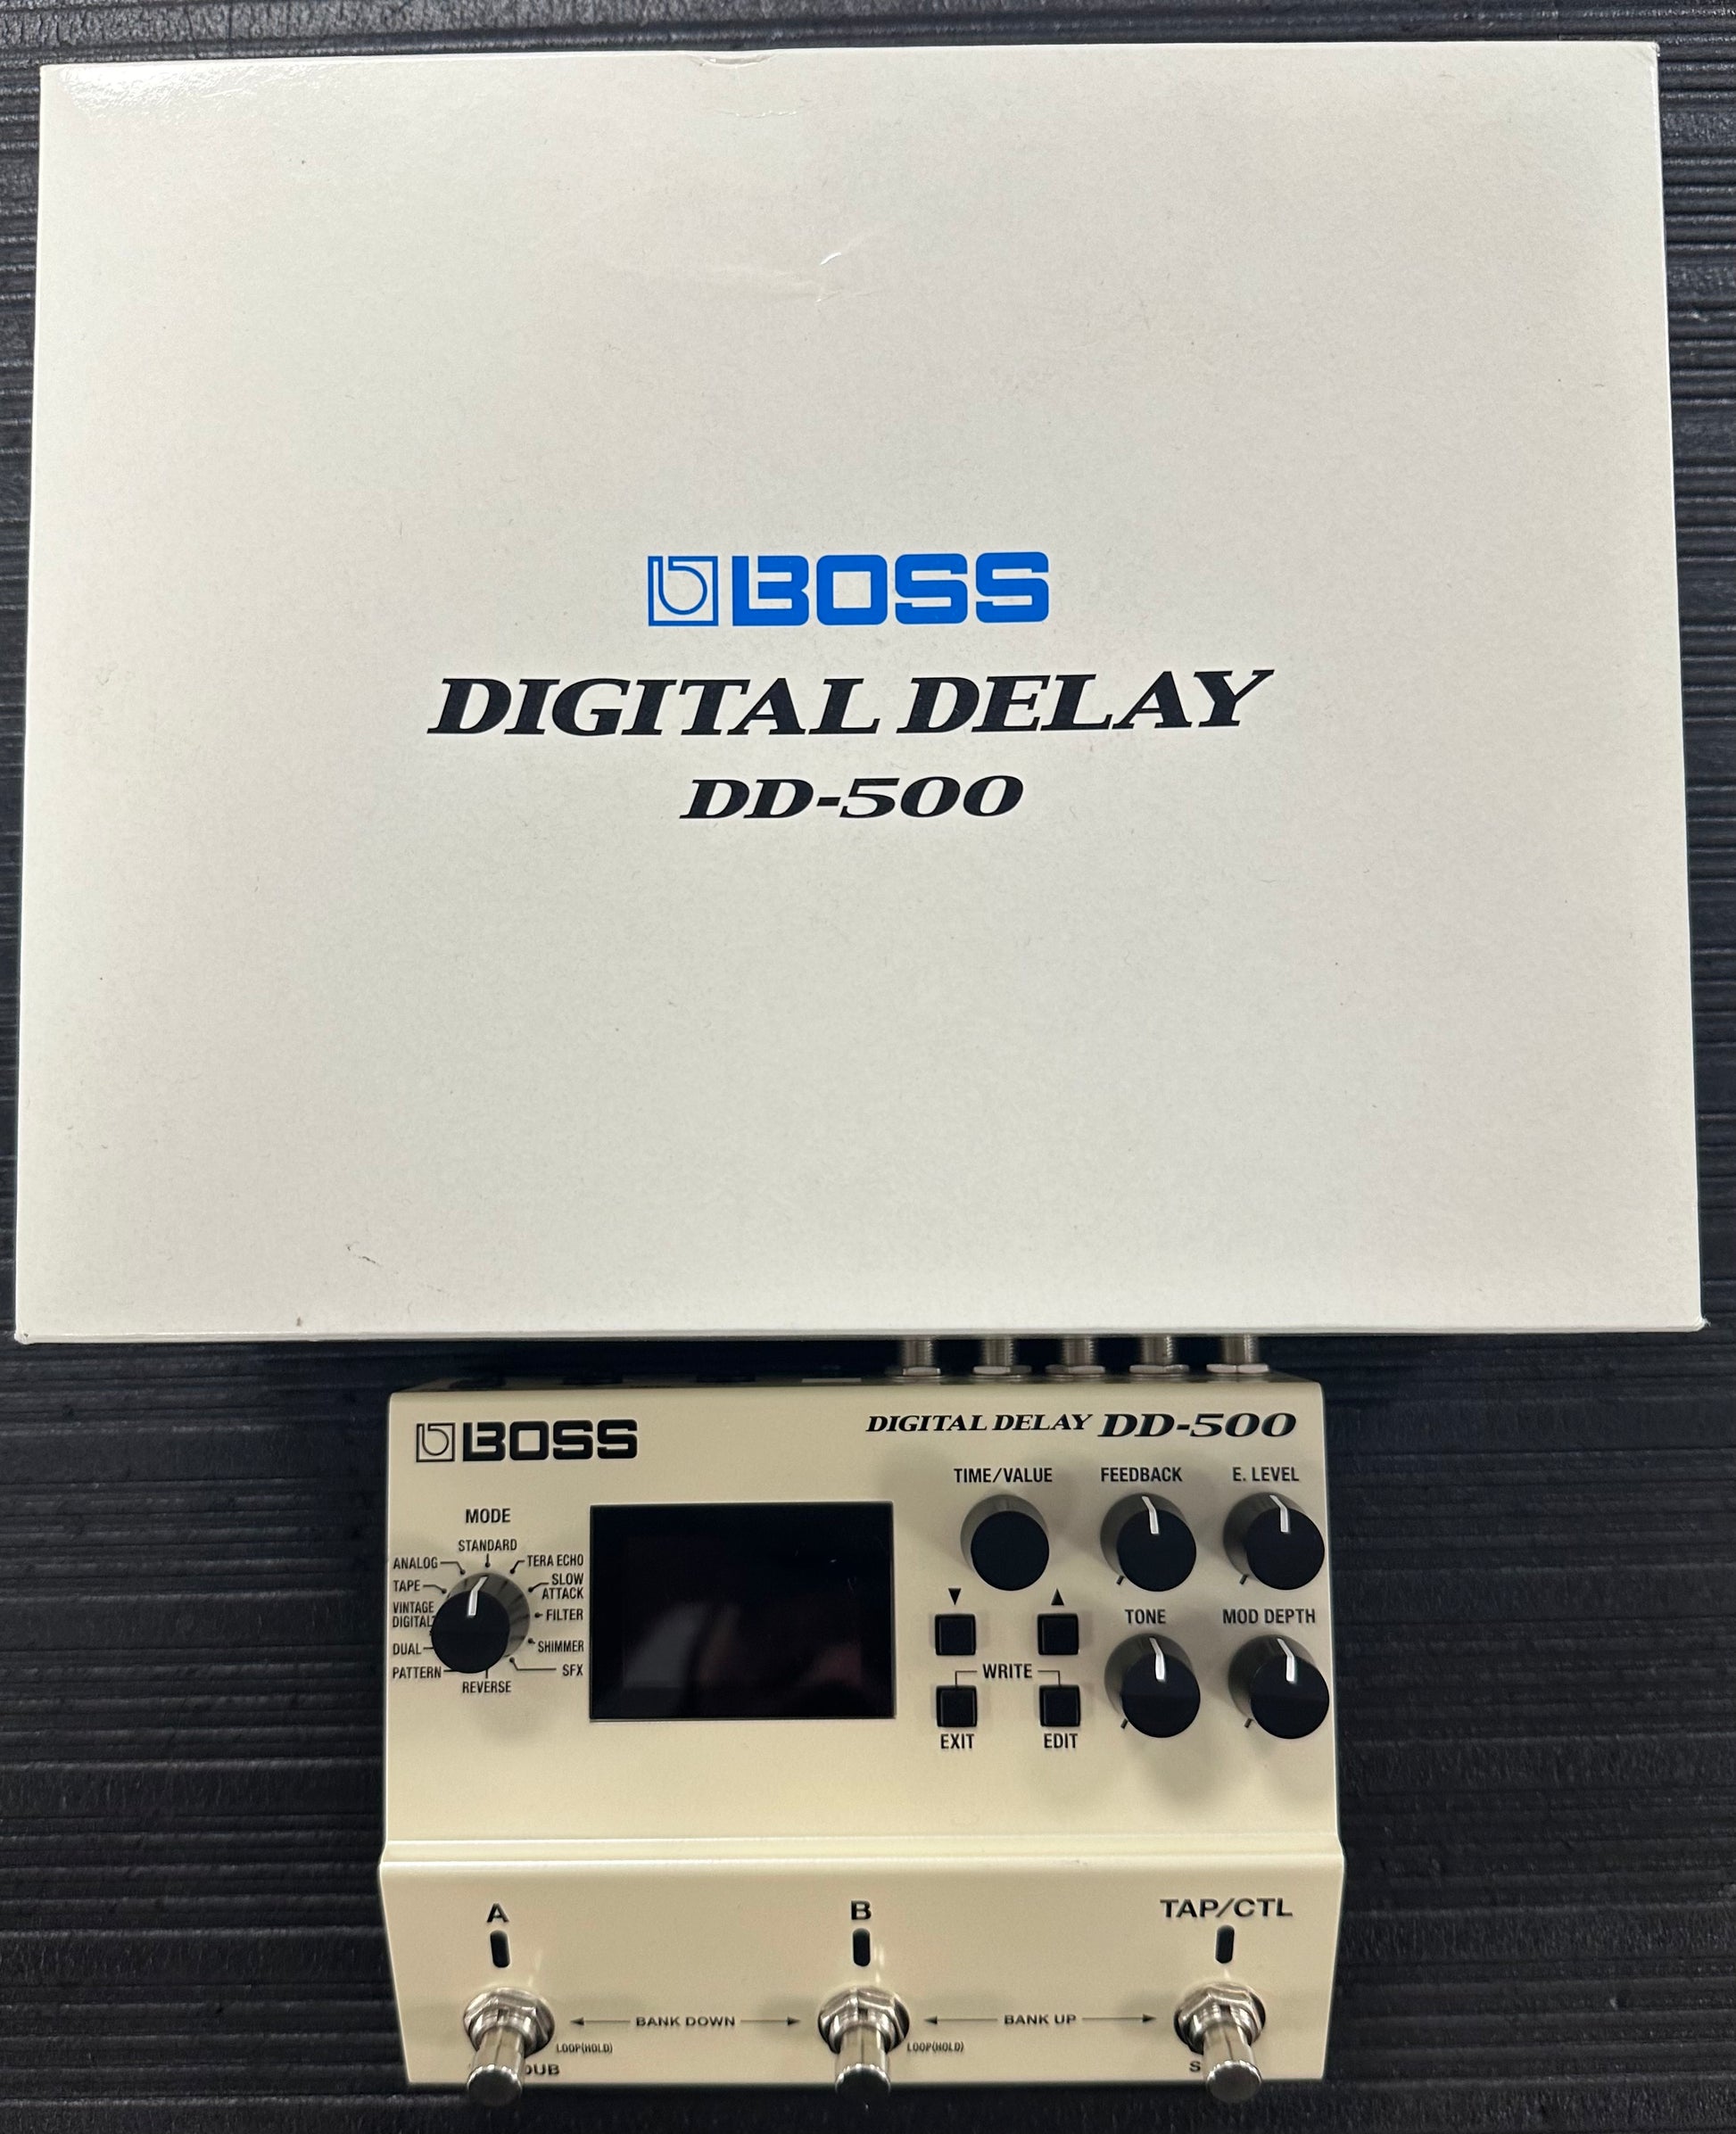 Top with box of Boss DD-500 Digital Delay TSS4052